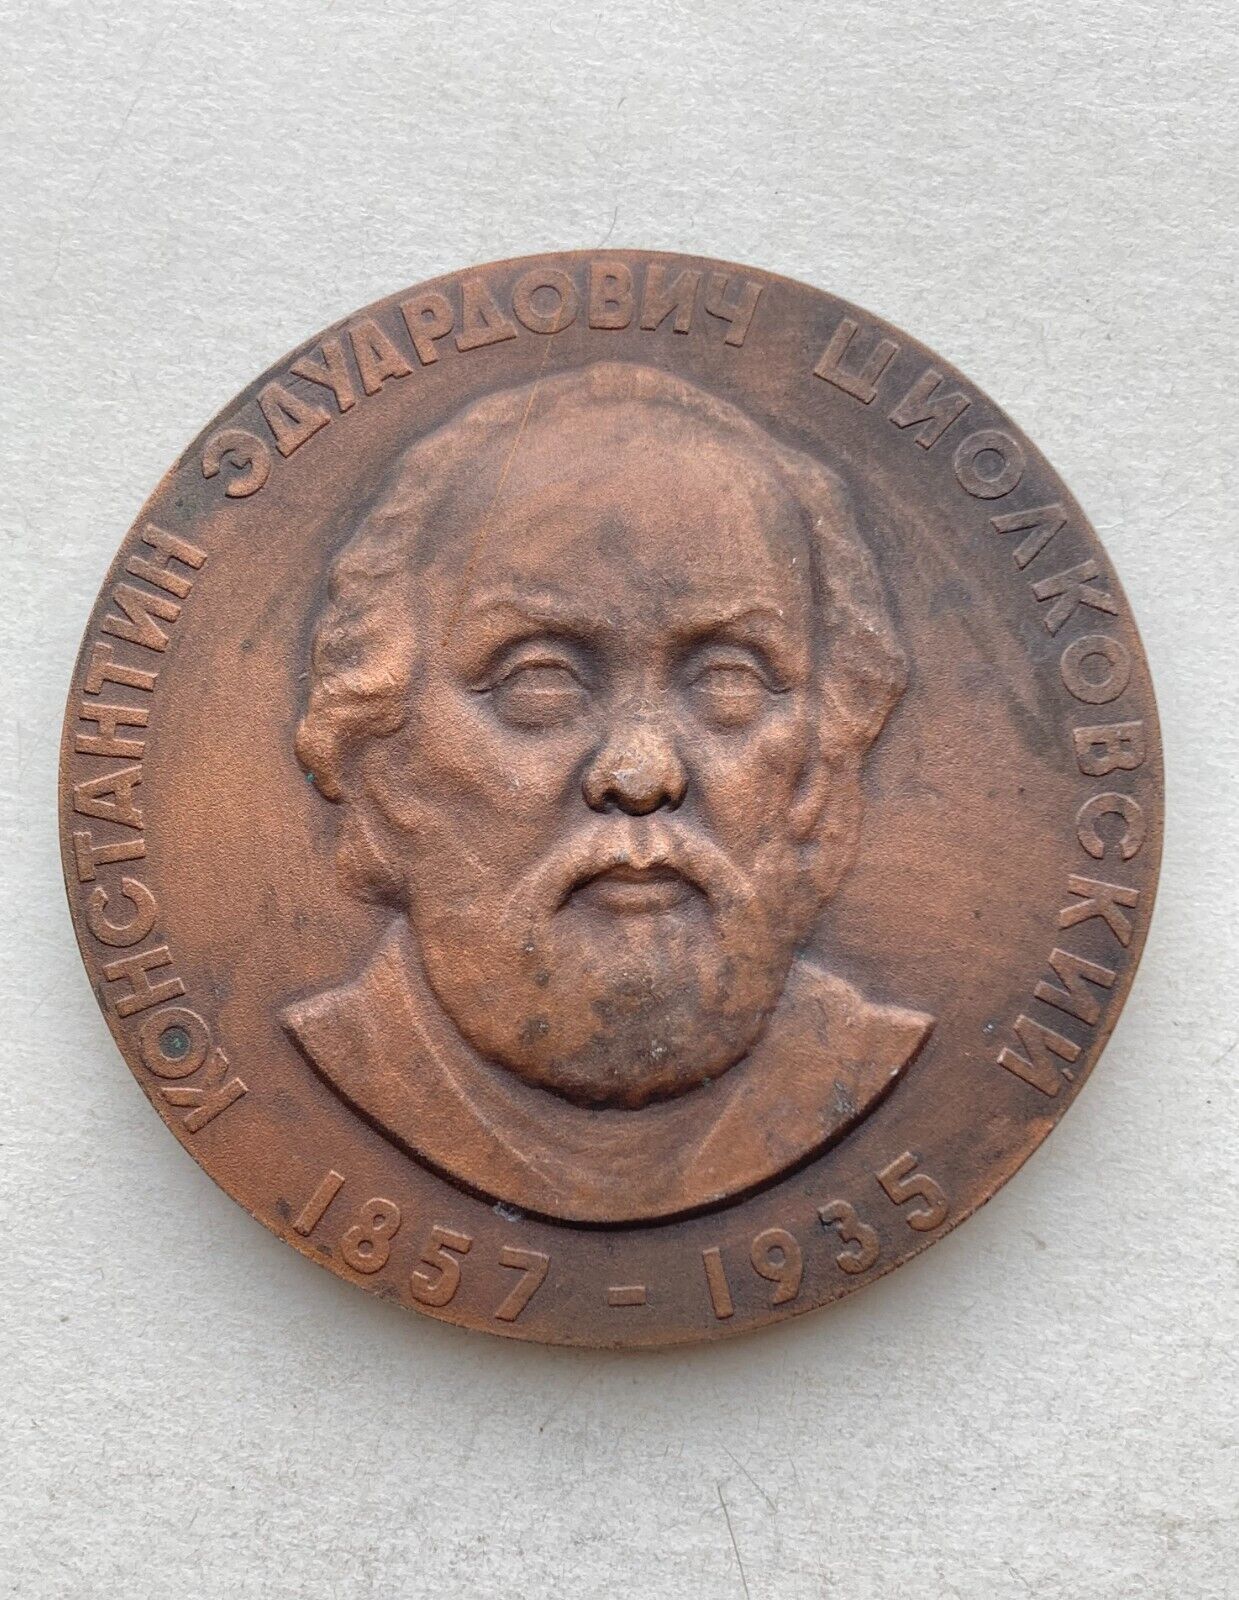 Table medal USSR - Founder of cosmonautics Konstantin Tsiolkovsky 1857-1935